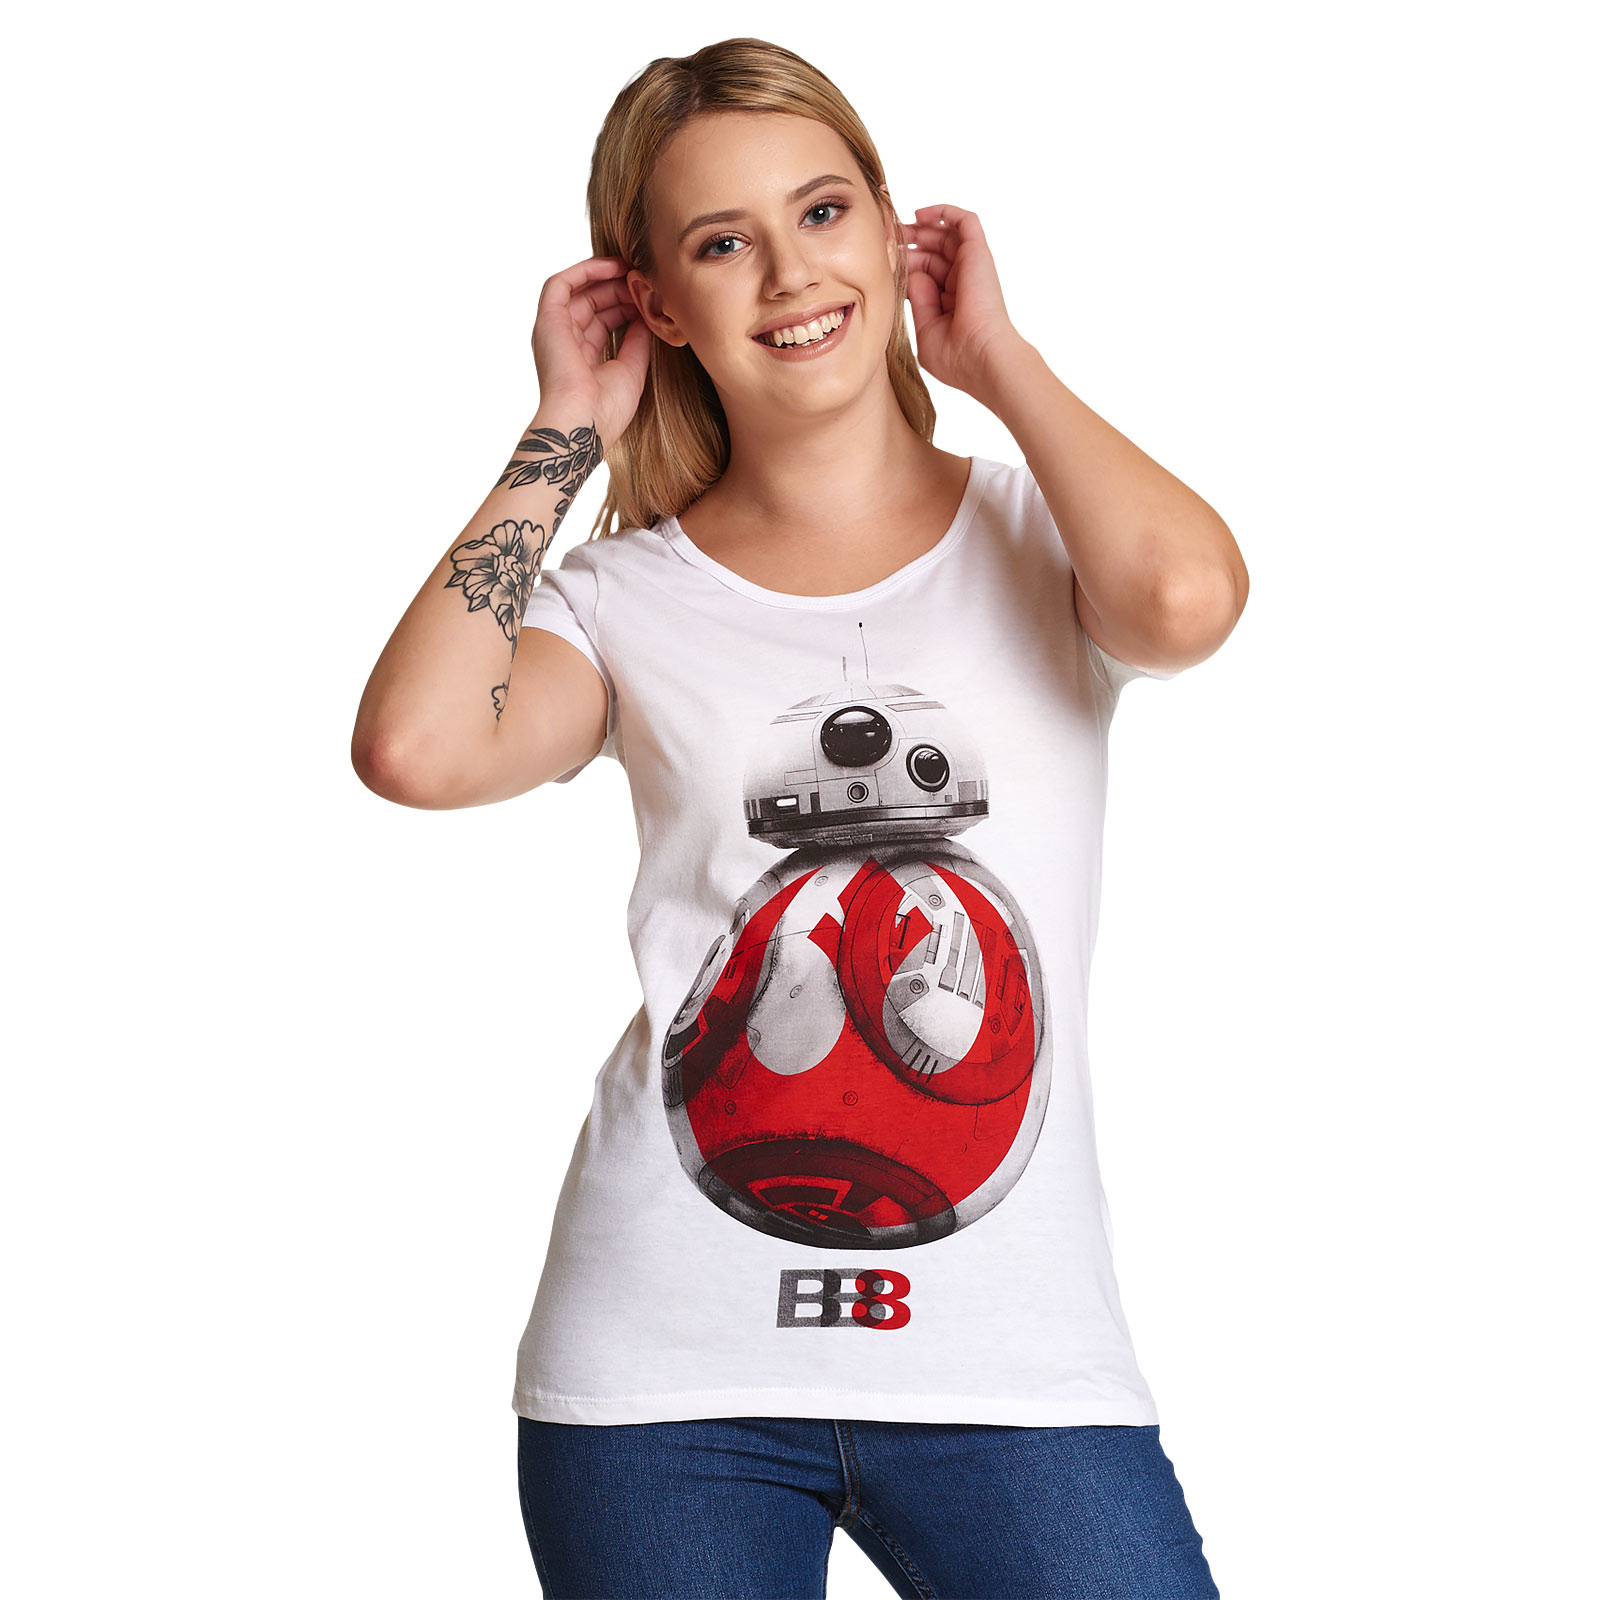 Star Wars - T-shirt femme Rebel BB-8 blanc